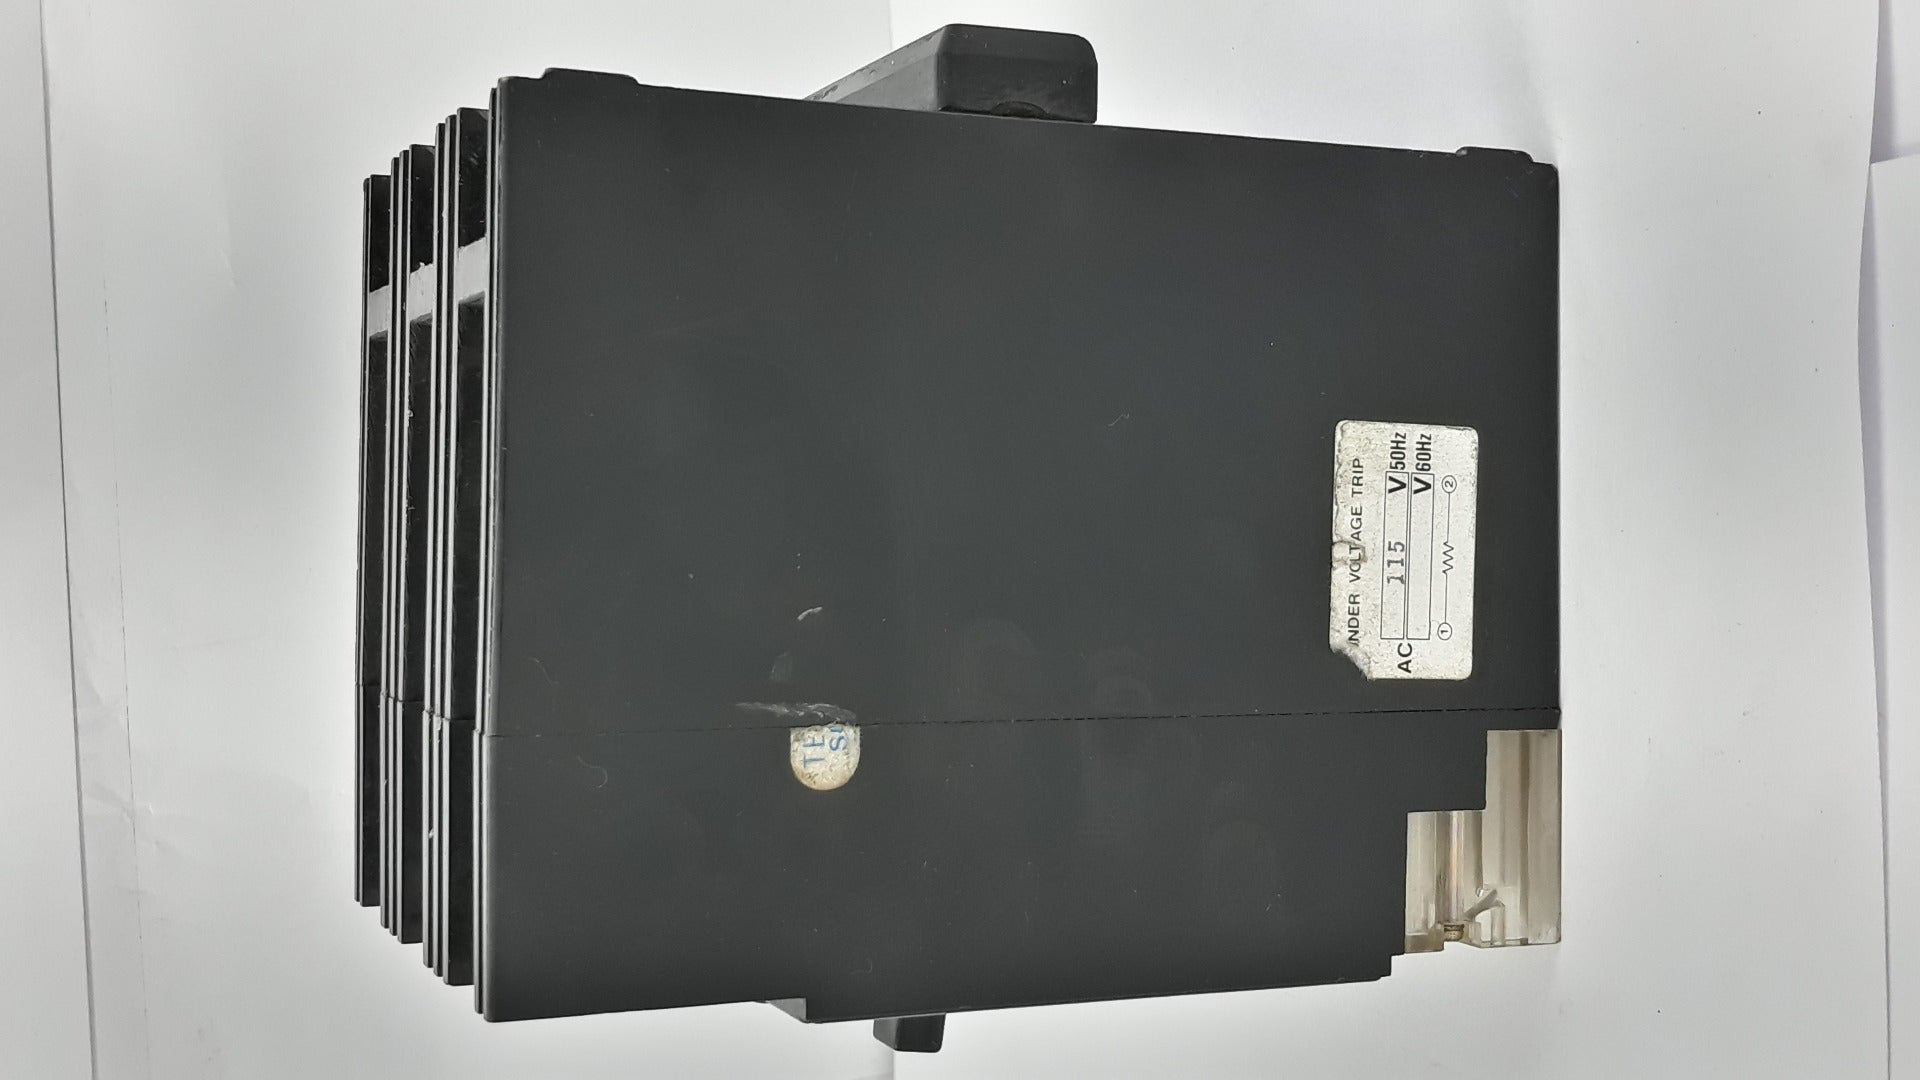 Terasaki Tlj-100E Circuit Breaker 80-100A